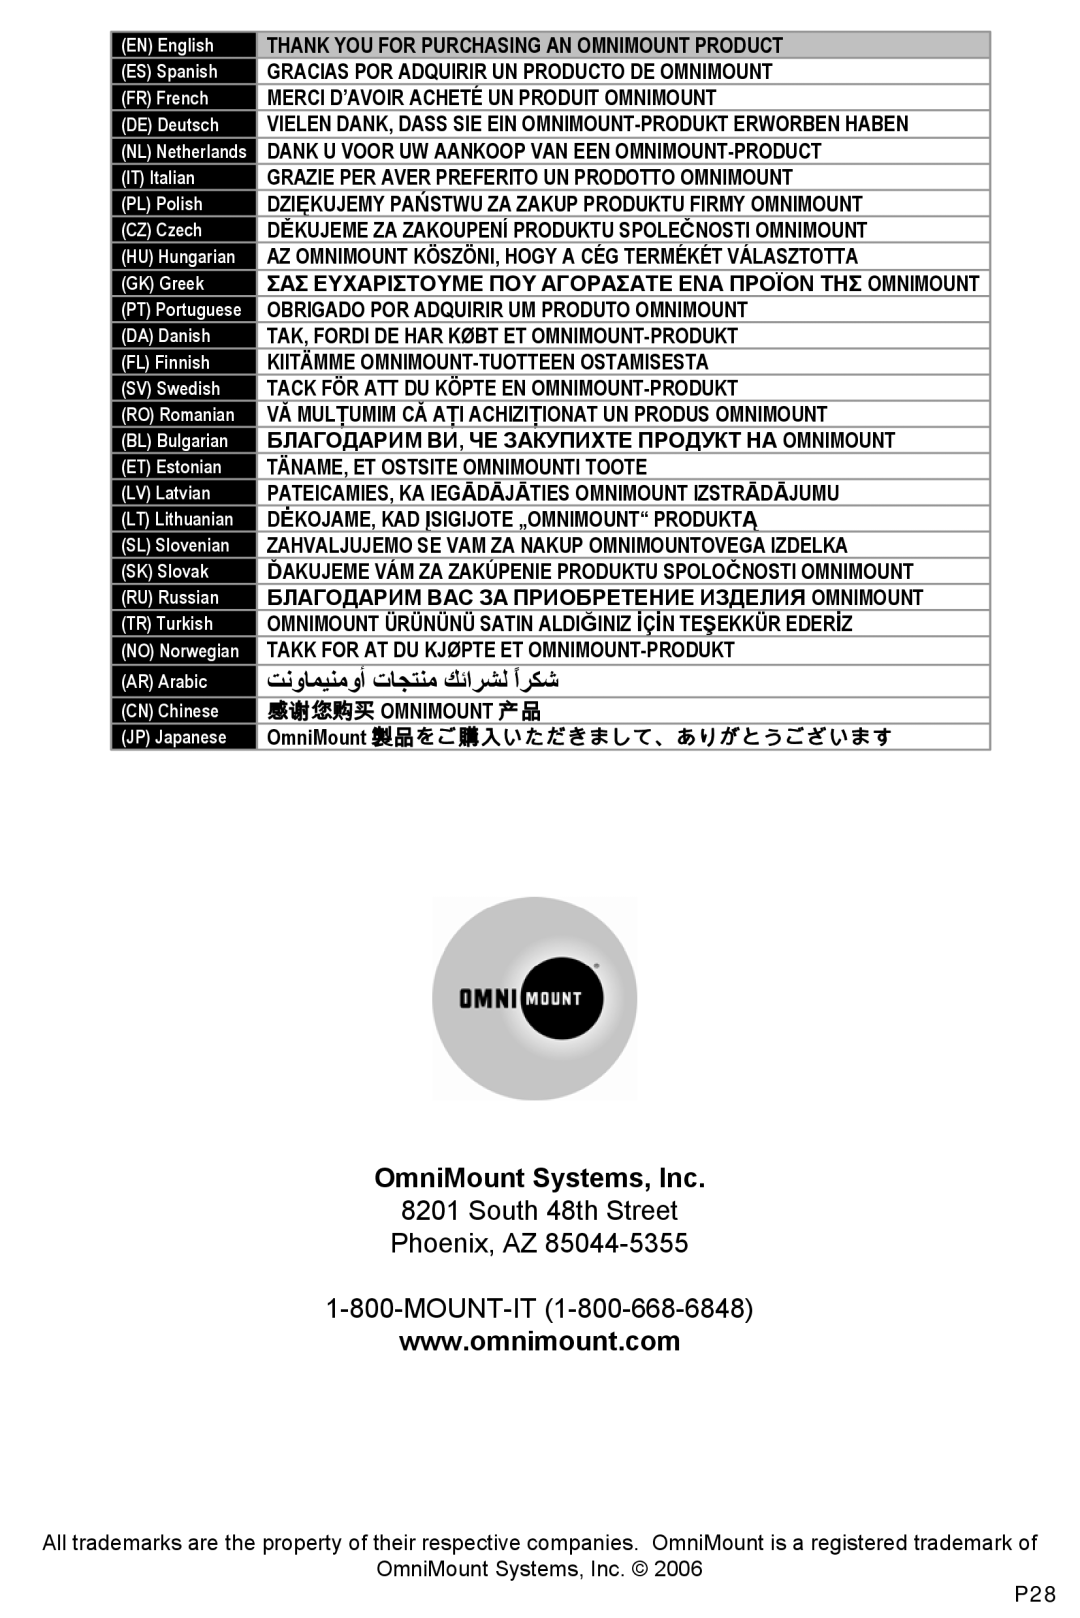 Omnimount U2-F manual OmniMount Systems, Inc, ﺖﻧوﺎﻤﻴﻨﻣوأ تﺎﺠﺘﻨﻣ ﻚﺋاﺮﺸﻟ اﺮﻜﺷً, South 48th Street Phoenix, AZ 1-800-MOUNT-IT 